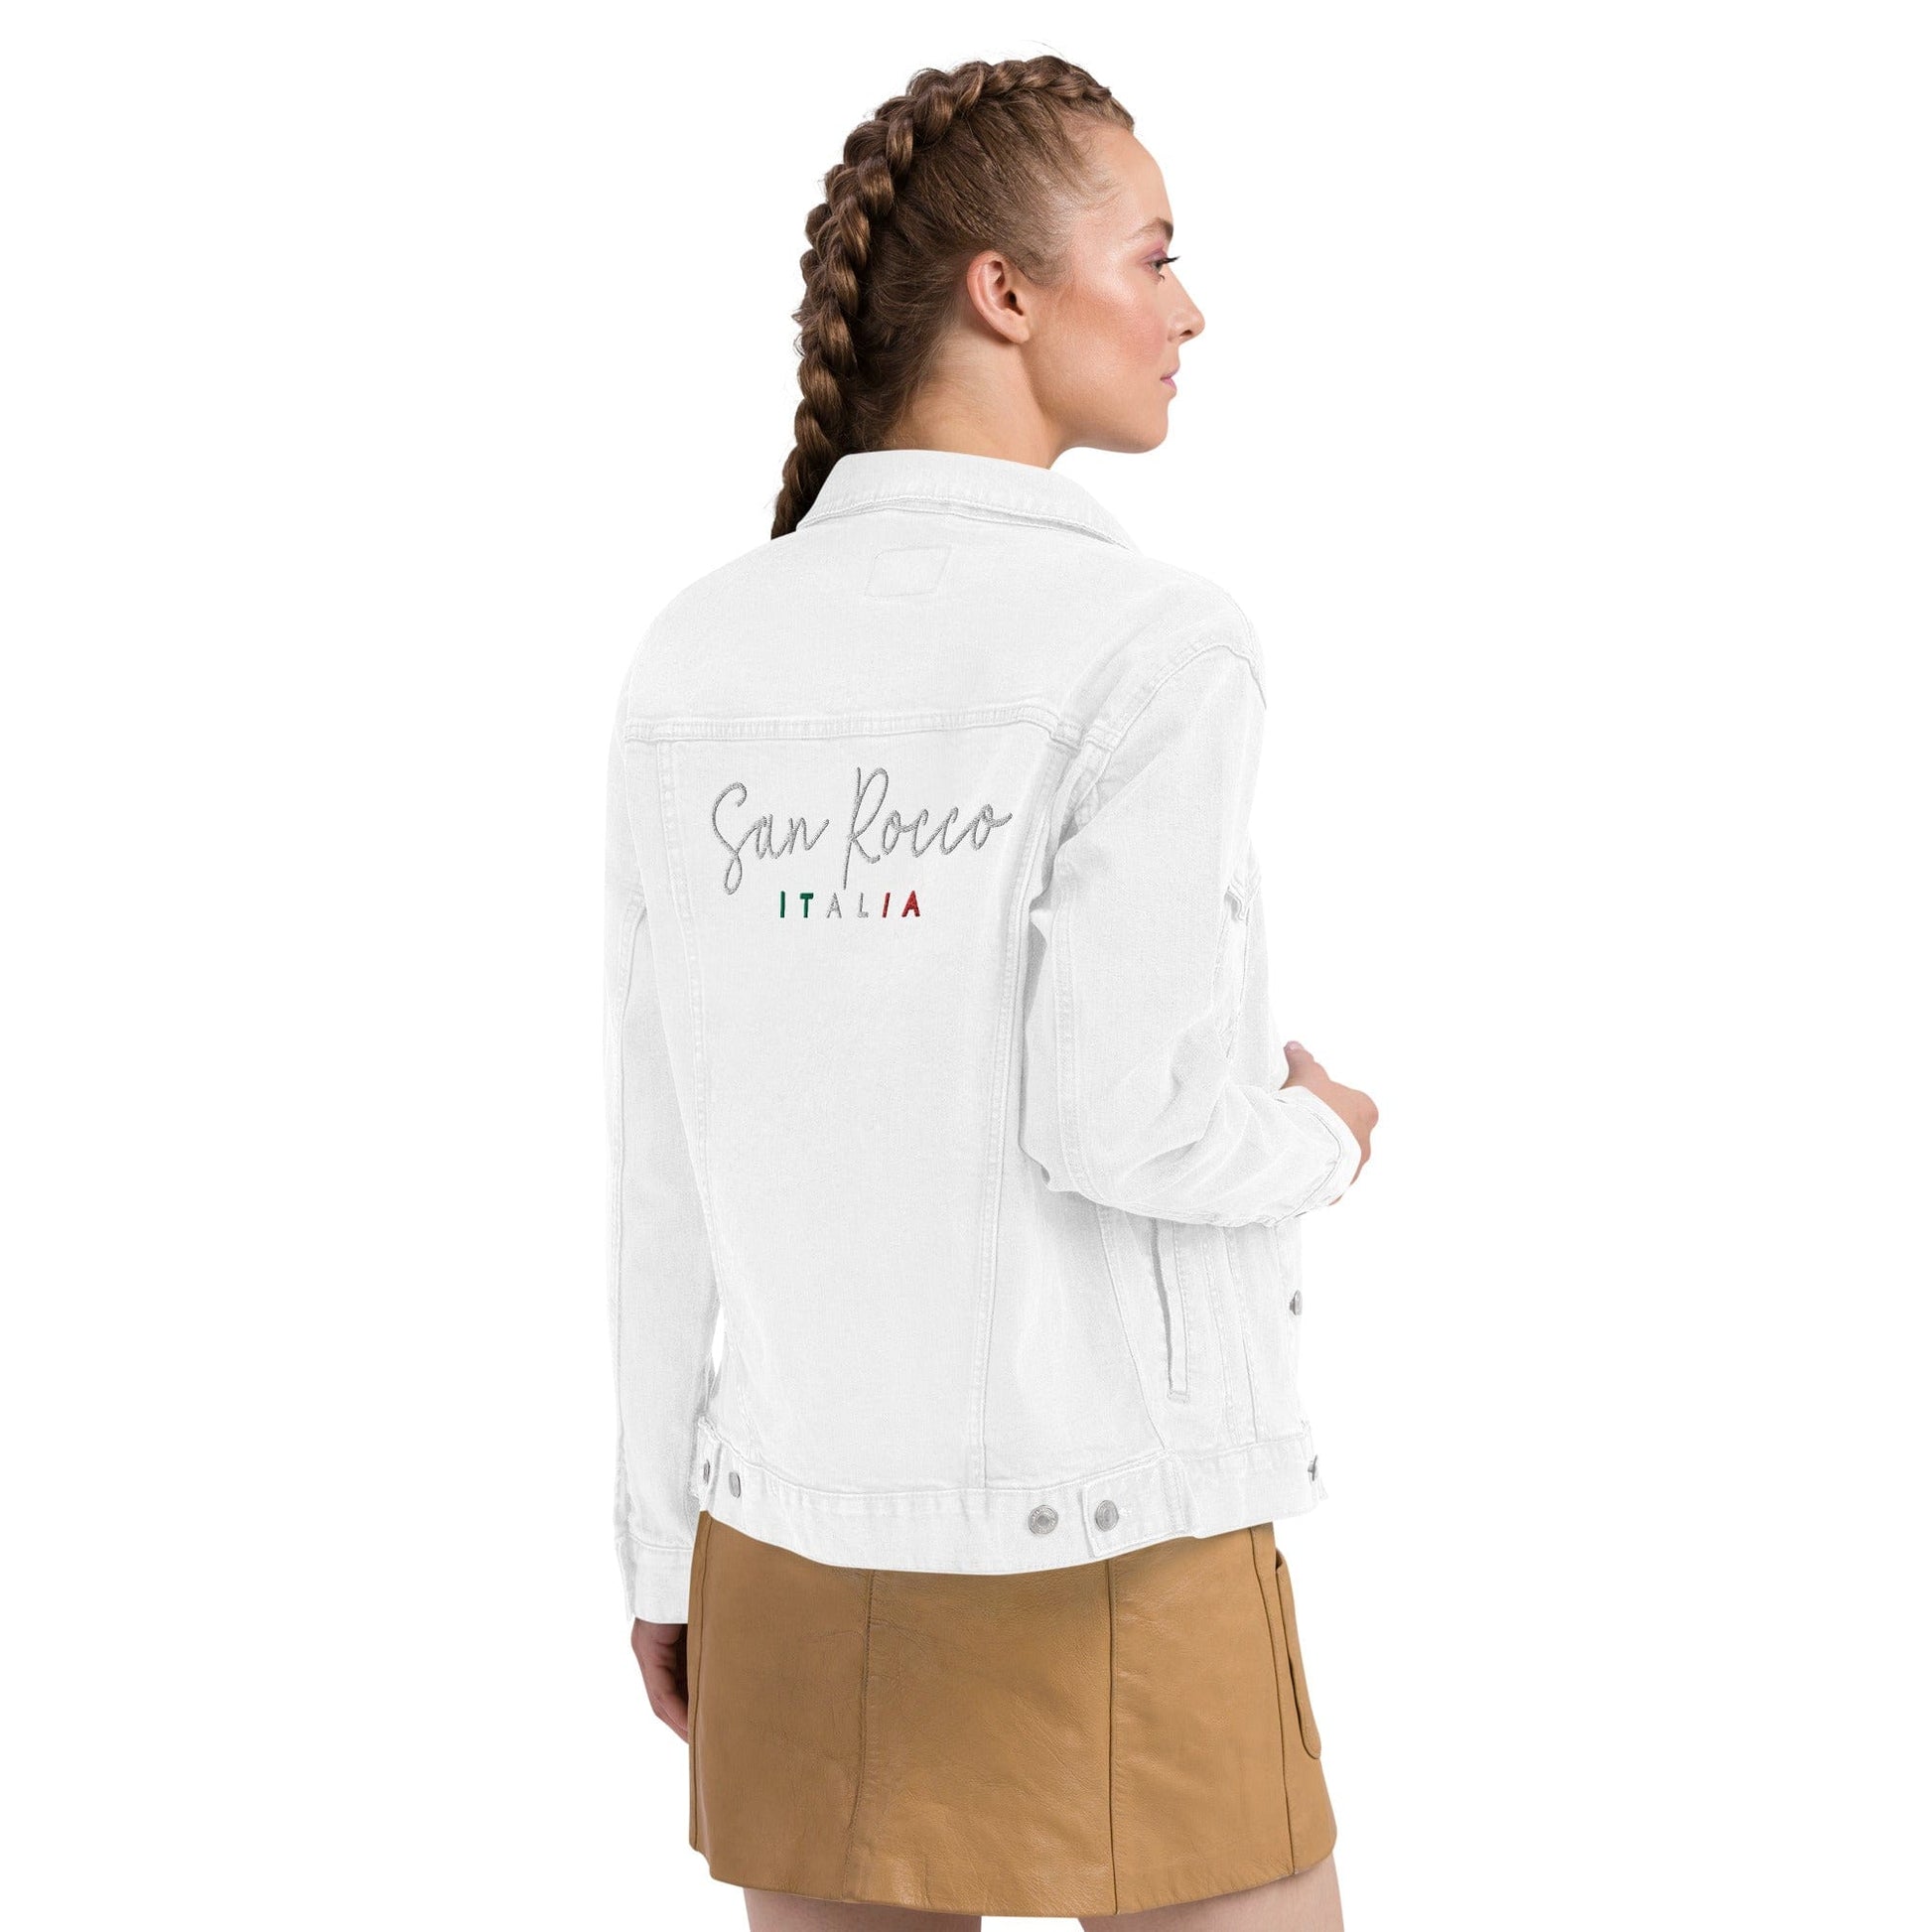 San Rocco Italia embroidered denim jacket - unisex - Premium  - Shop now at San Rocco Italia